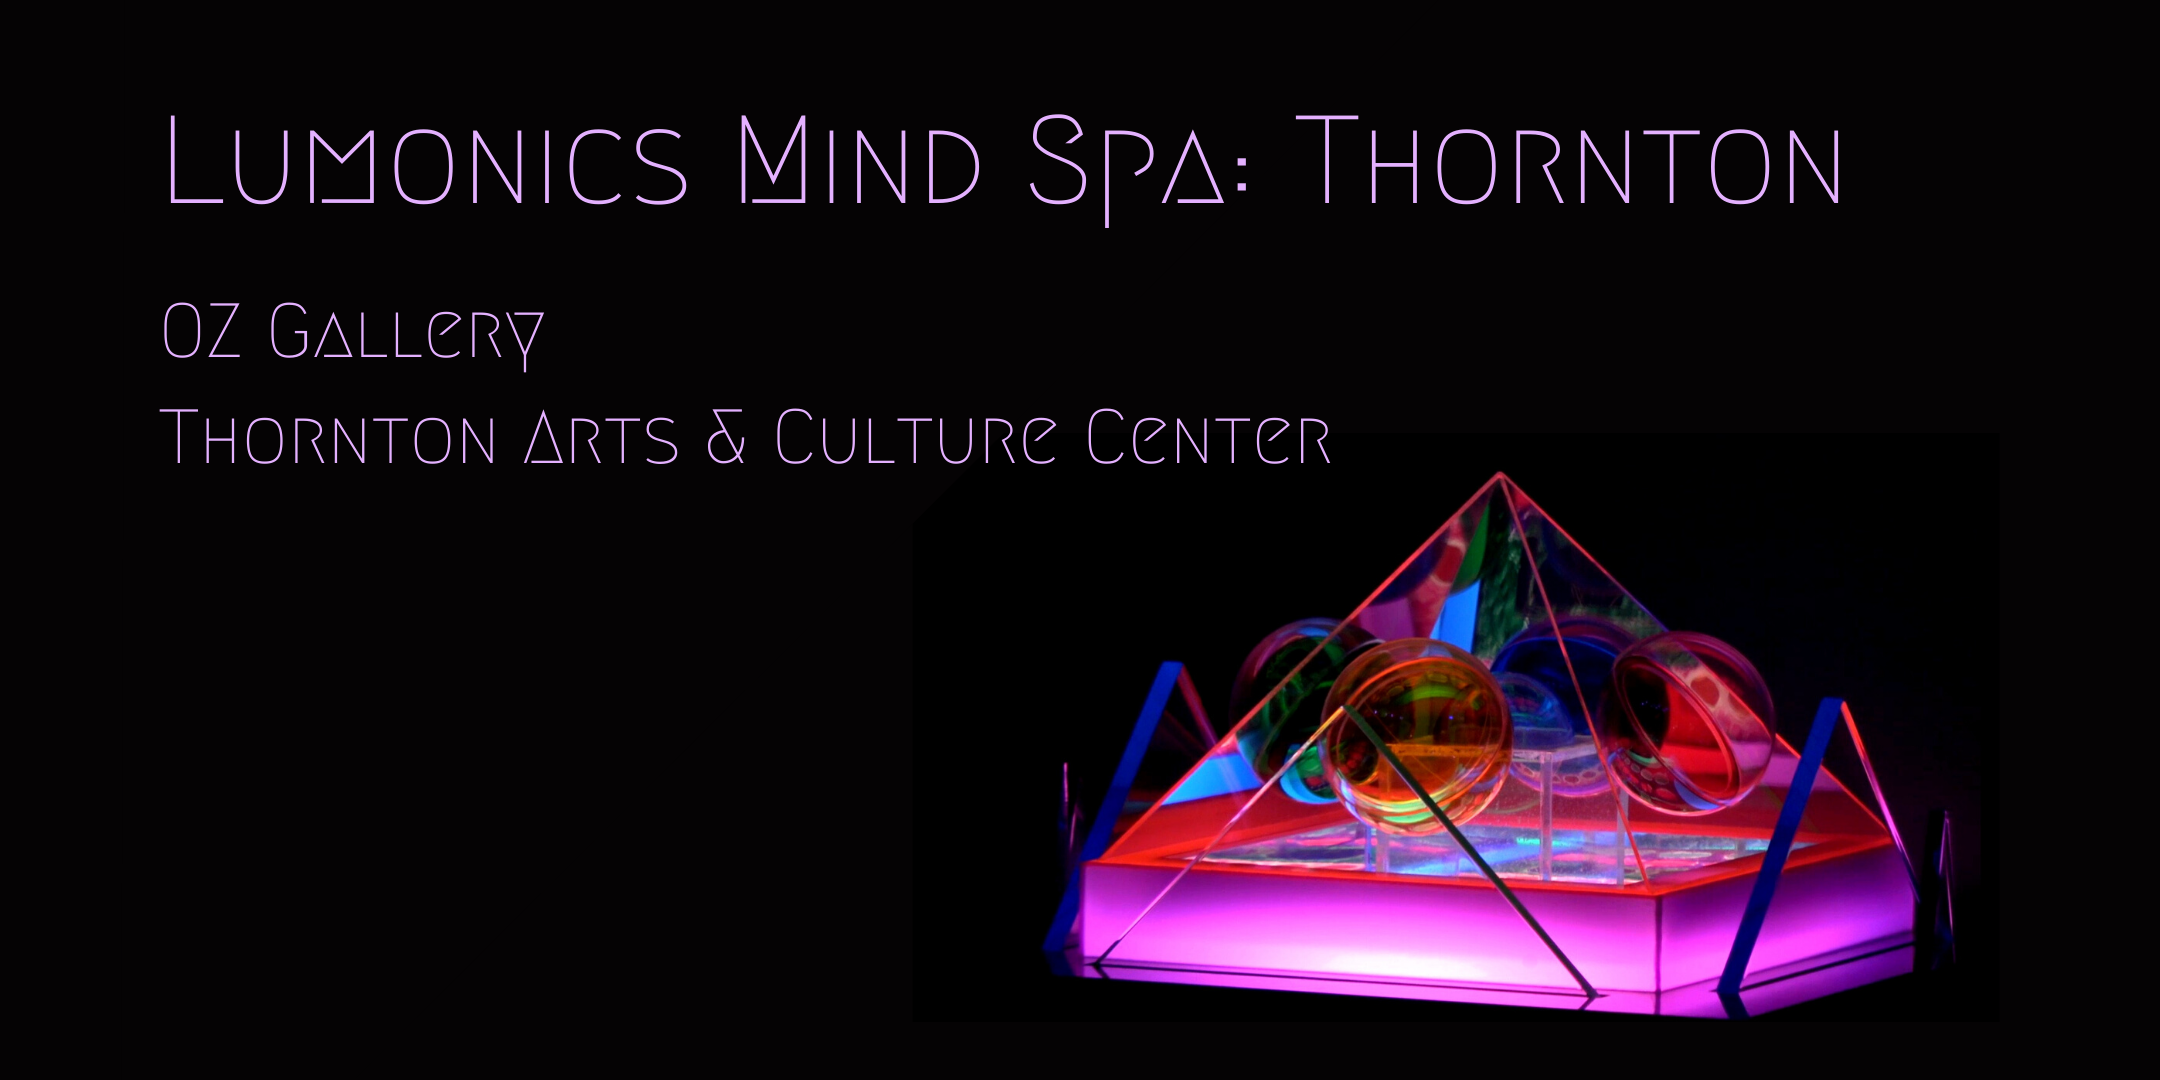 Art Exhibit, Lumonics Mind Spa: Thornton